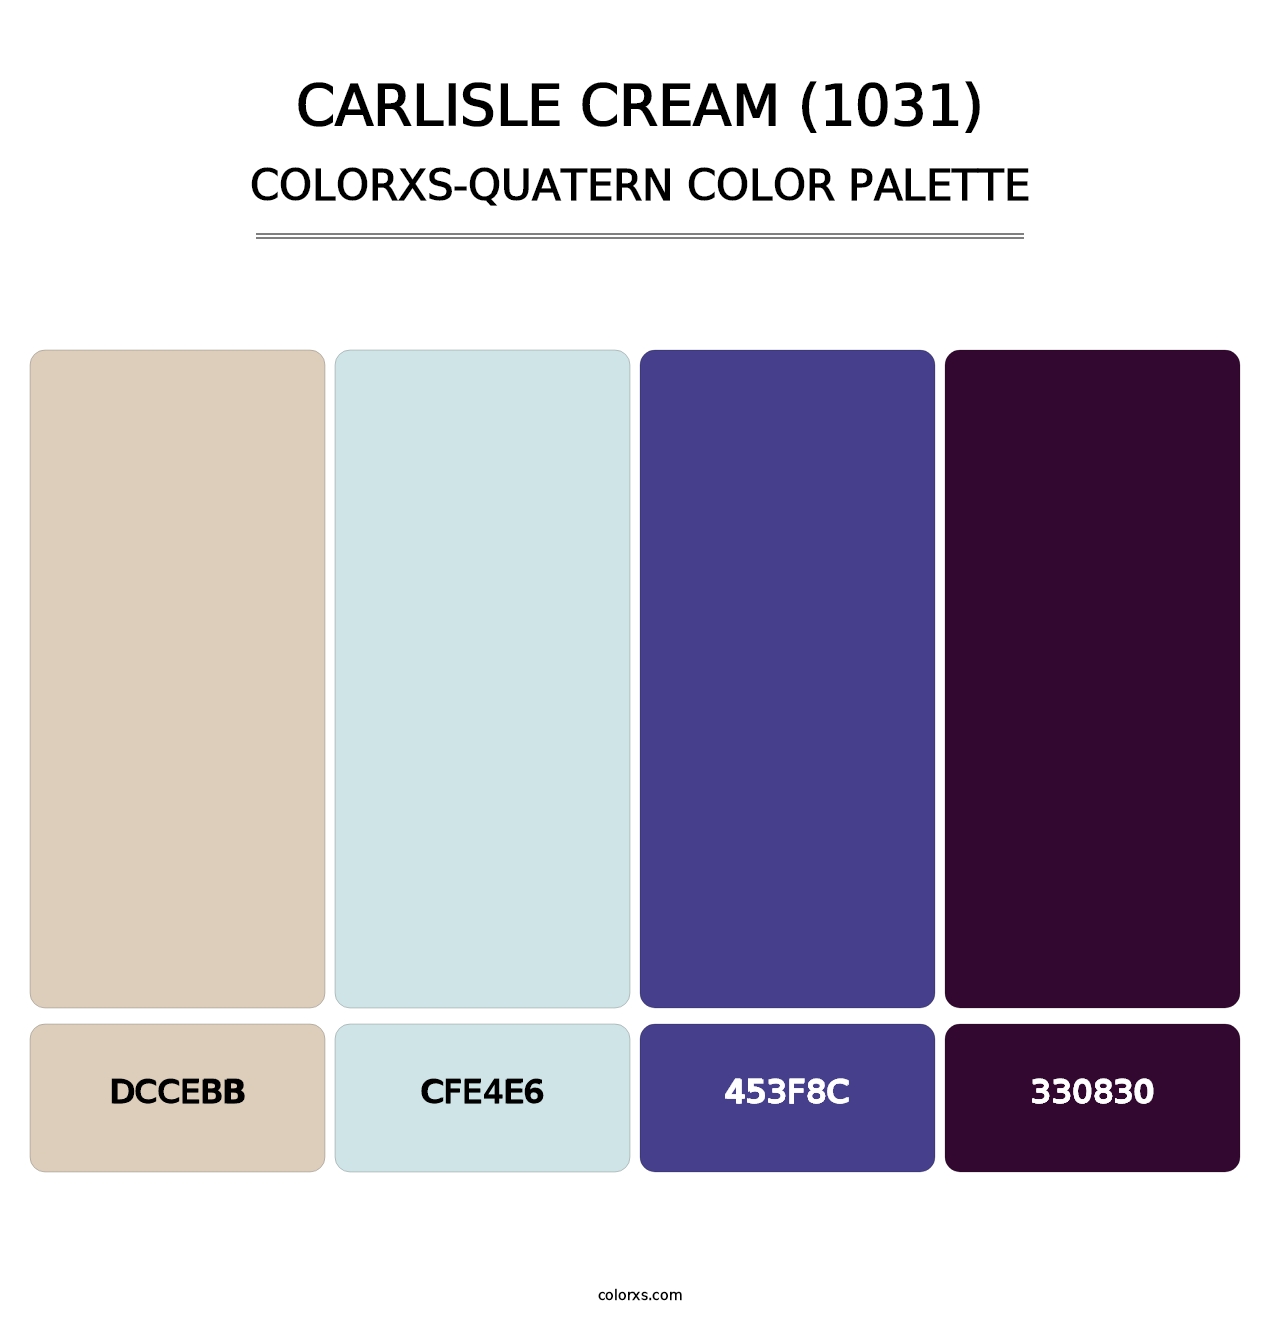 Carlisle Cream (1031) - Colorxs Quatern Palette